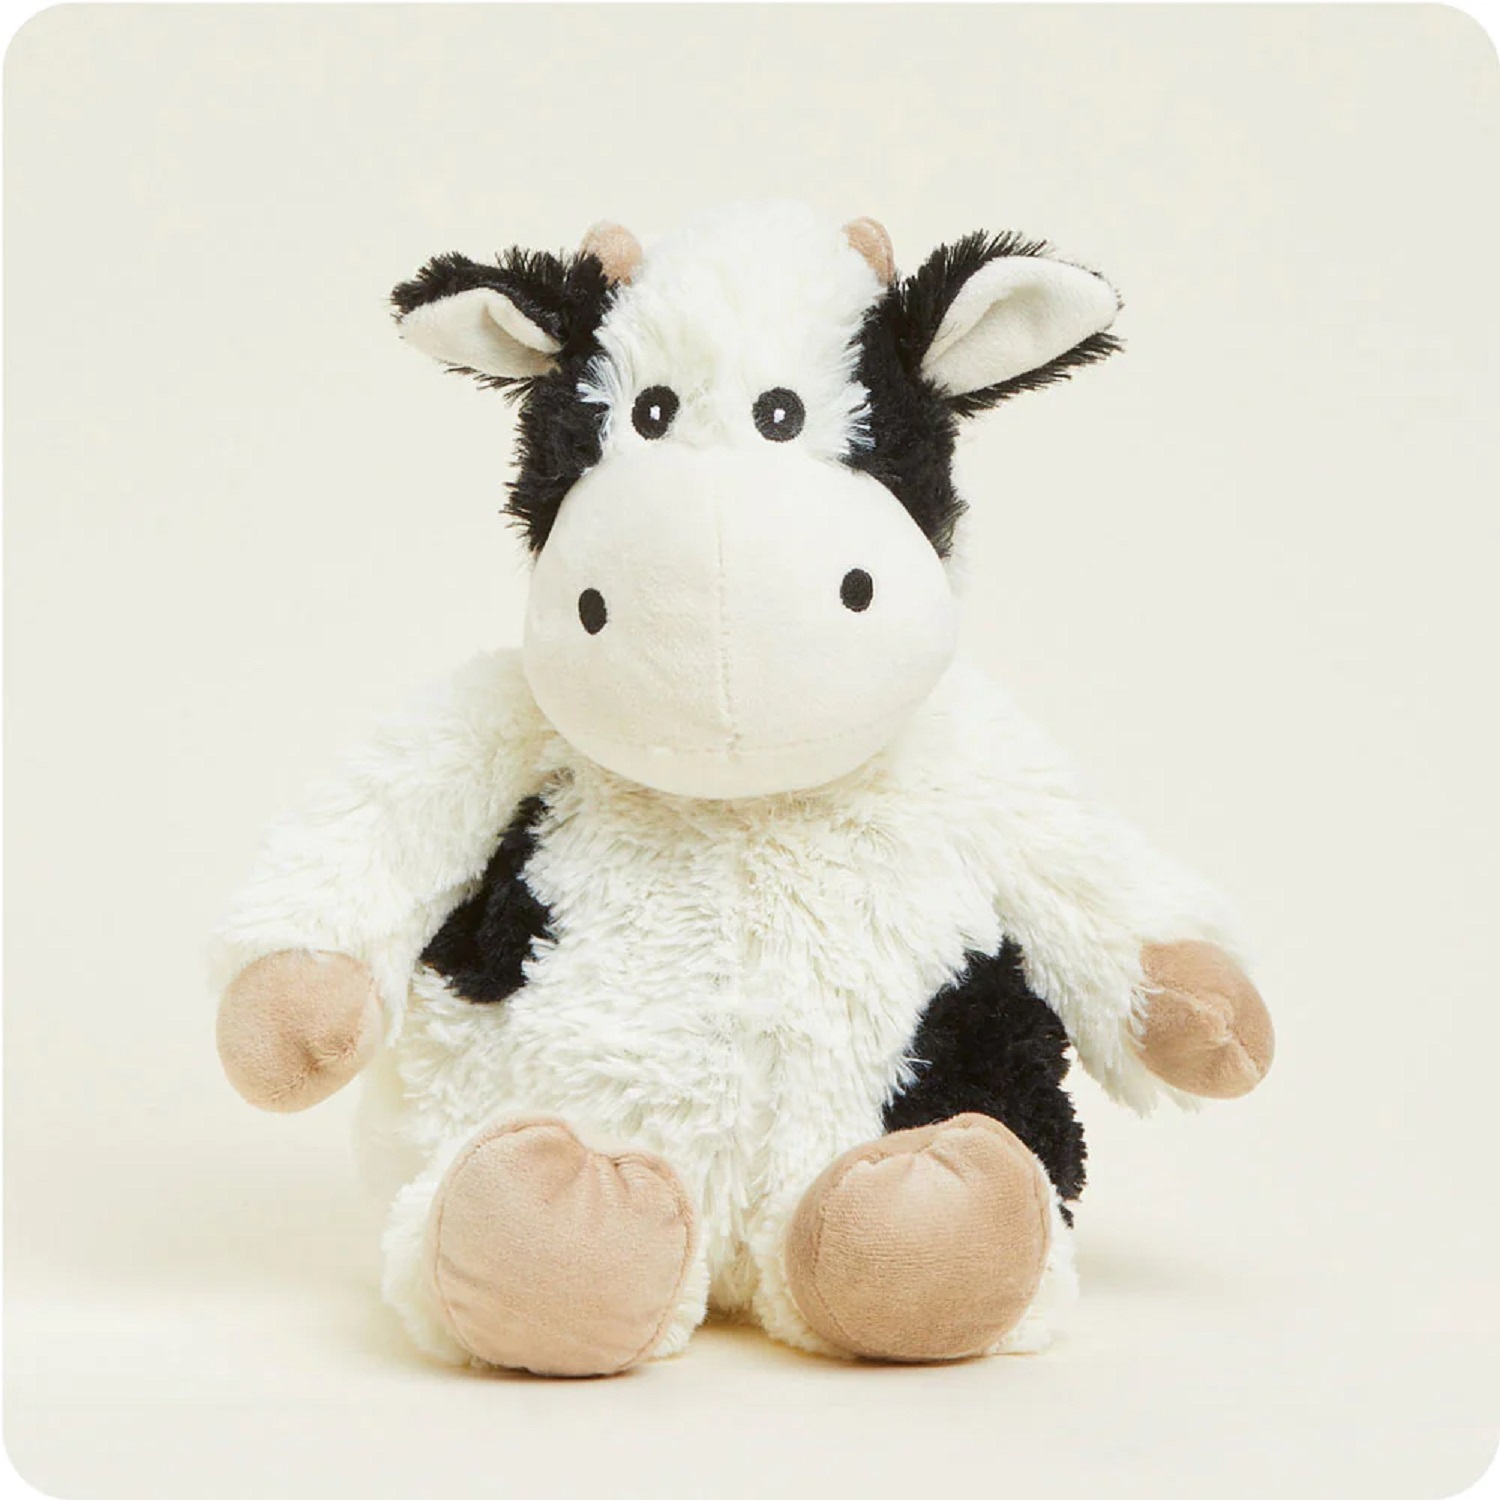 Warmies w warmies black & white cow warmies - cozy plush heatable lavender scented stuffed animal